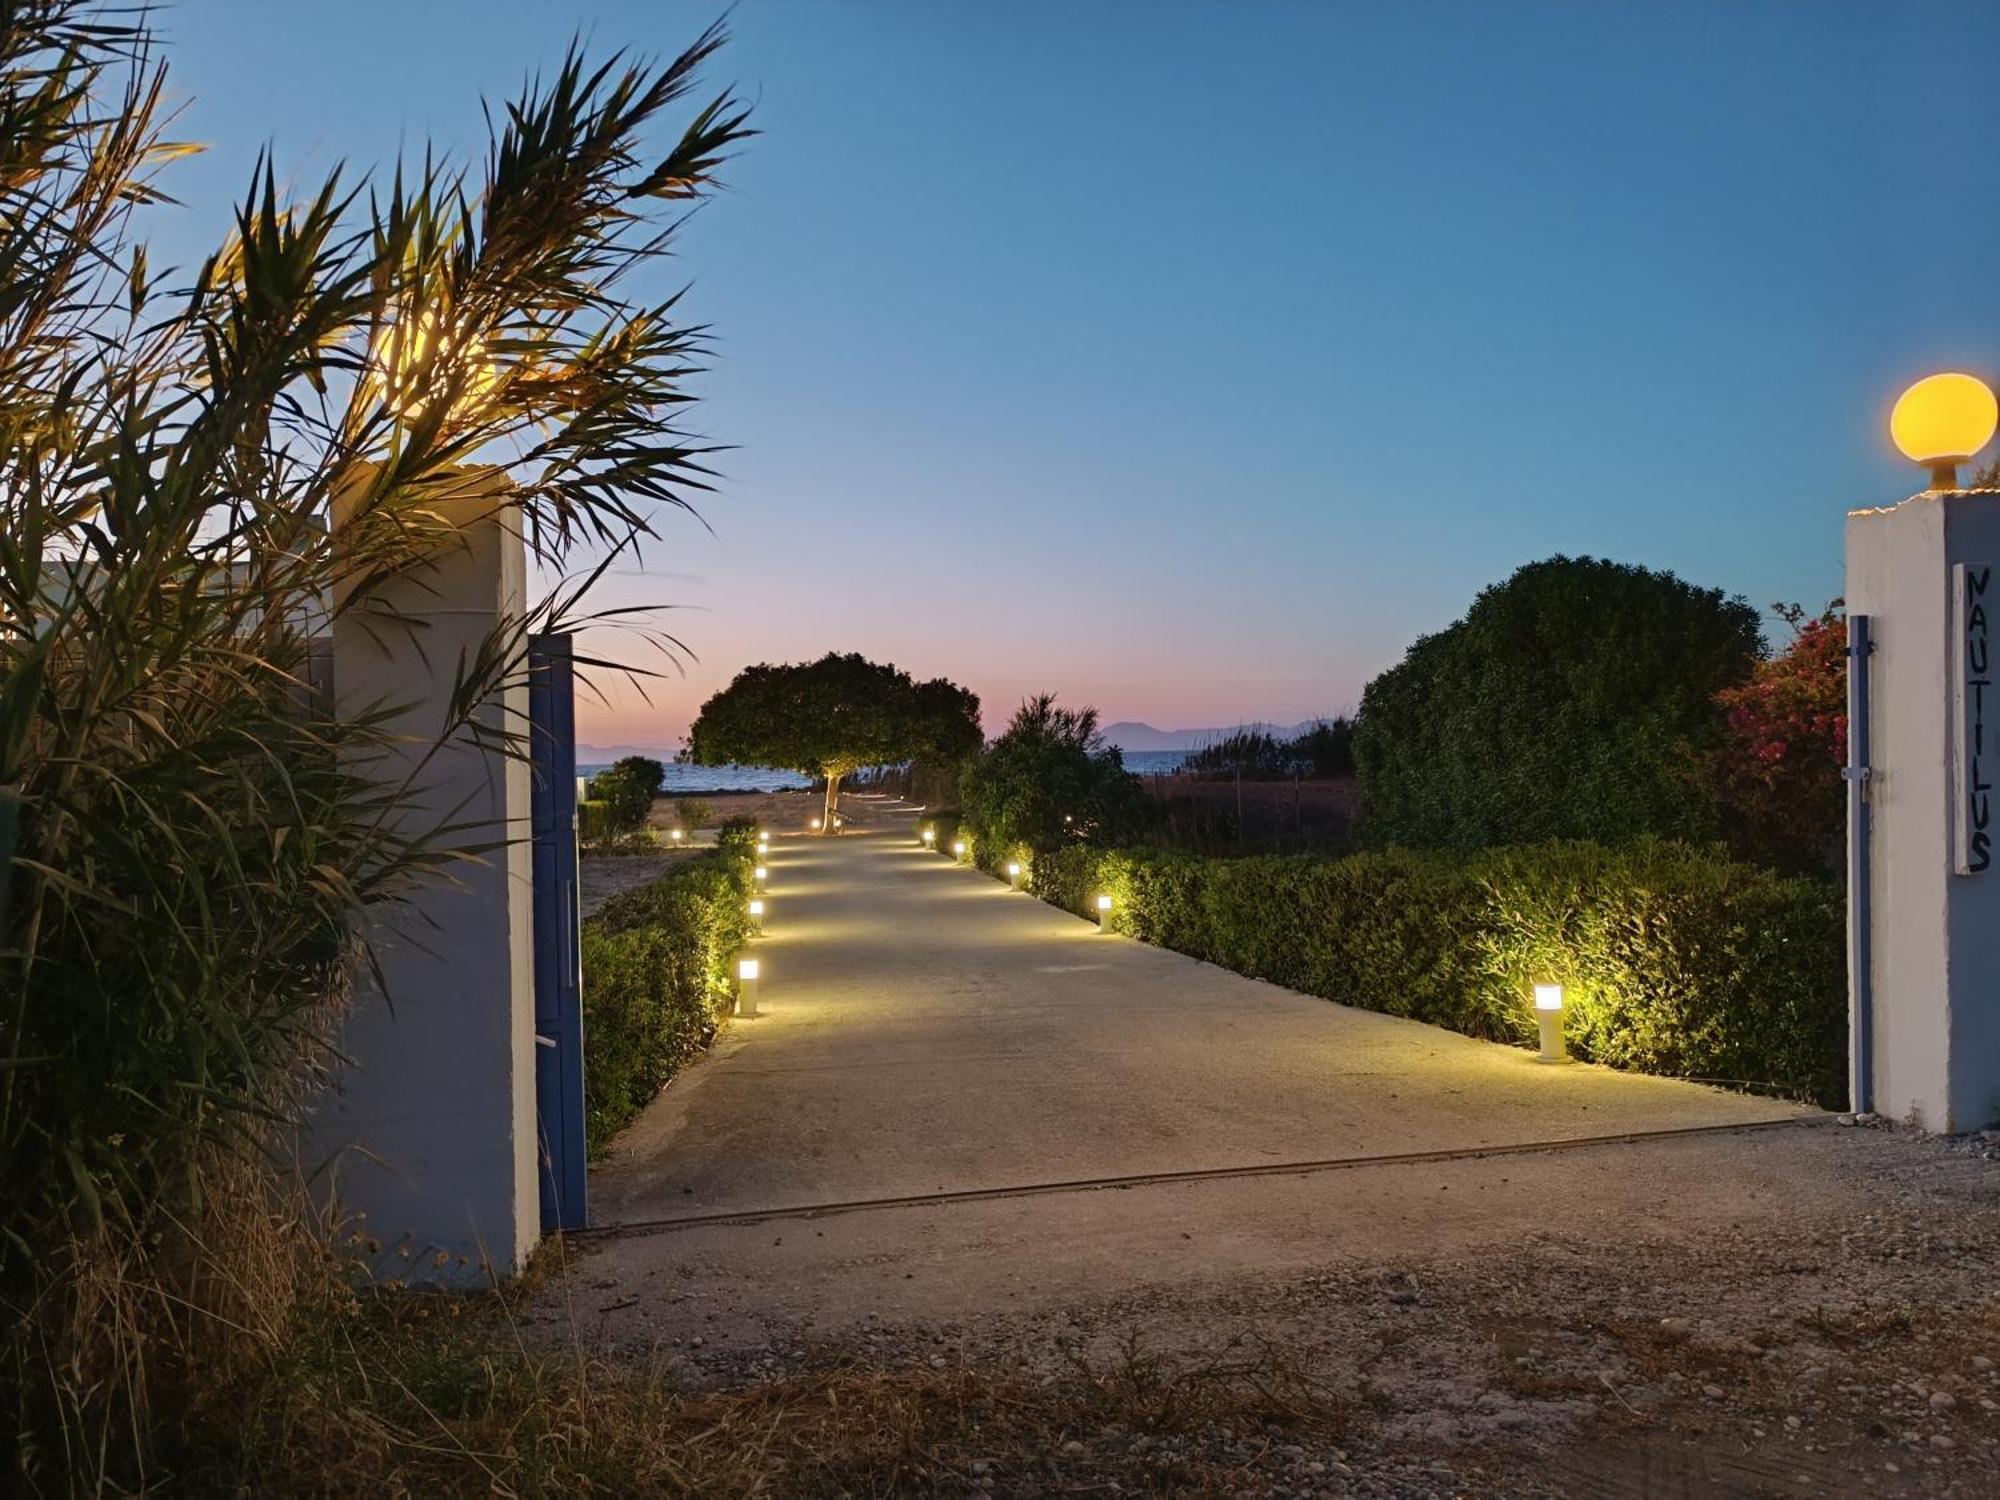 Nautilus Beach House, For Breath-Taking Sunsets Paradisi  Exterior photo